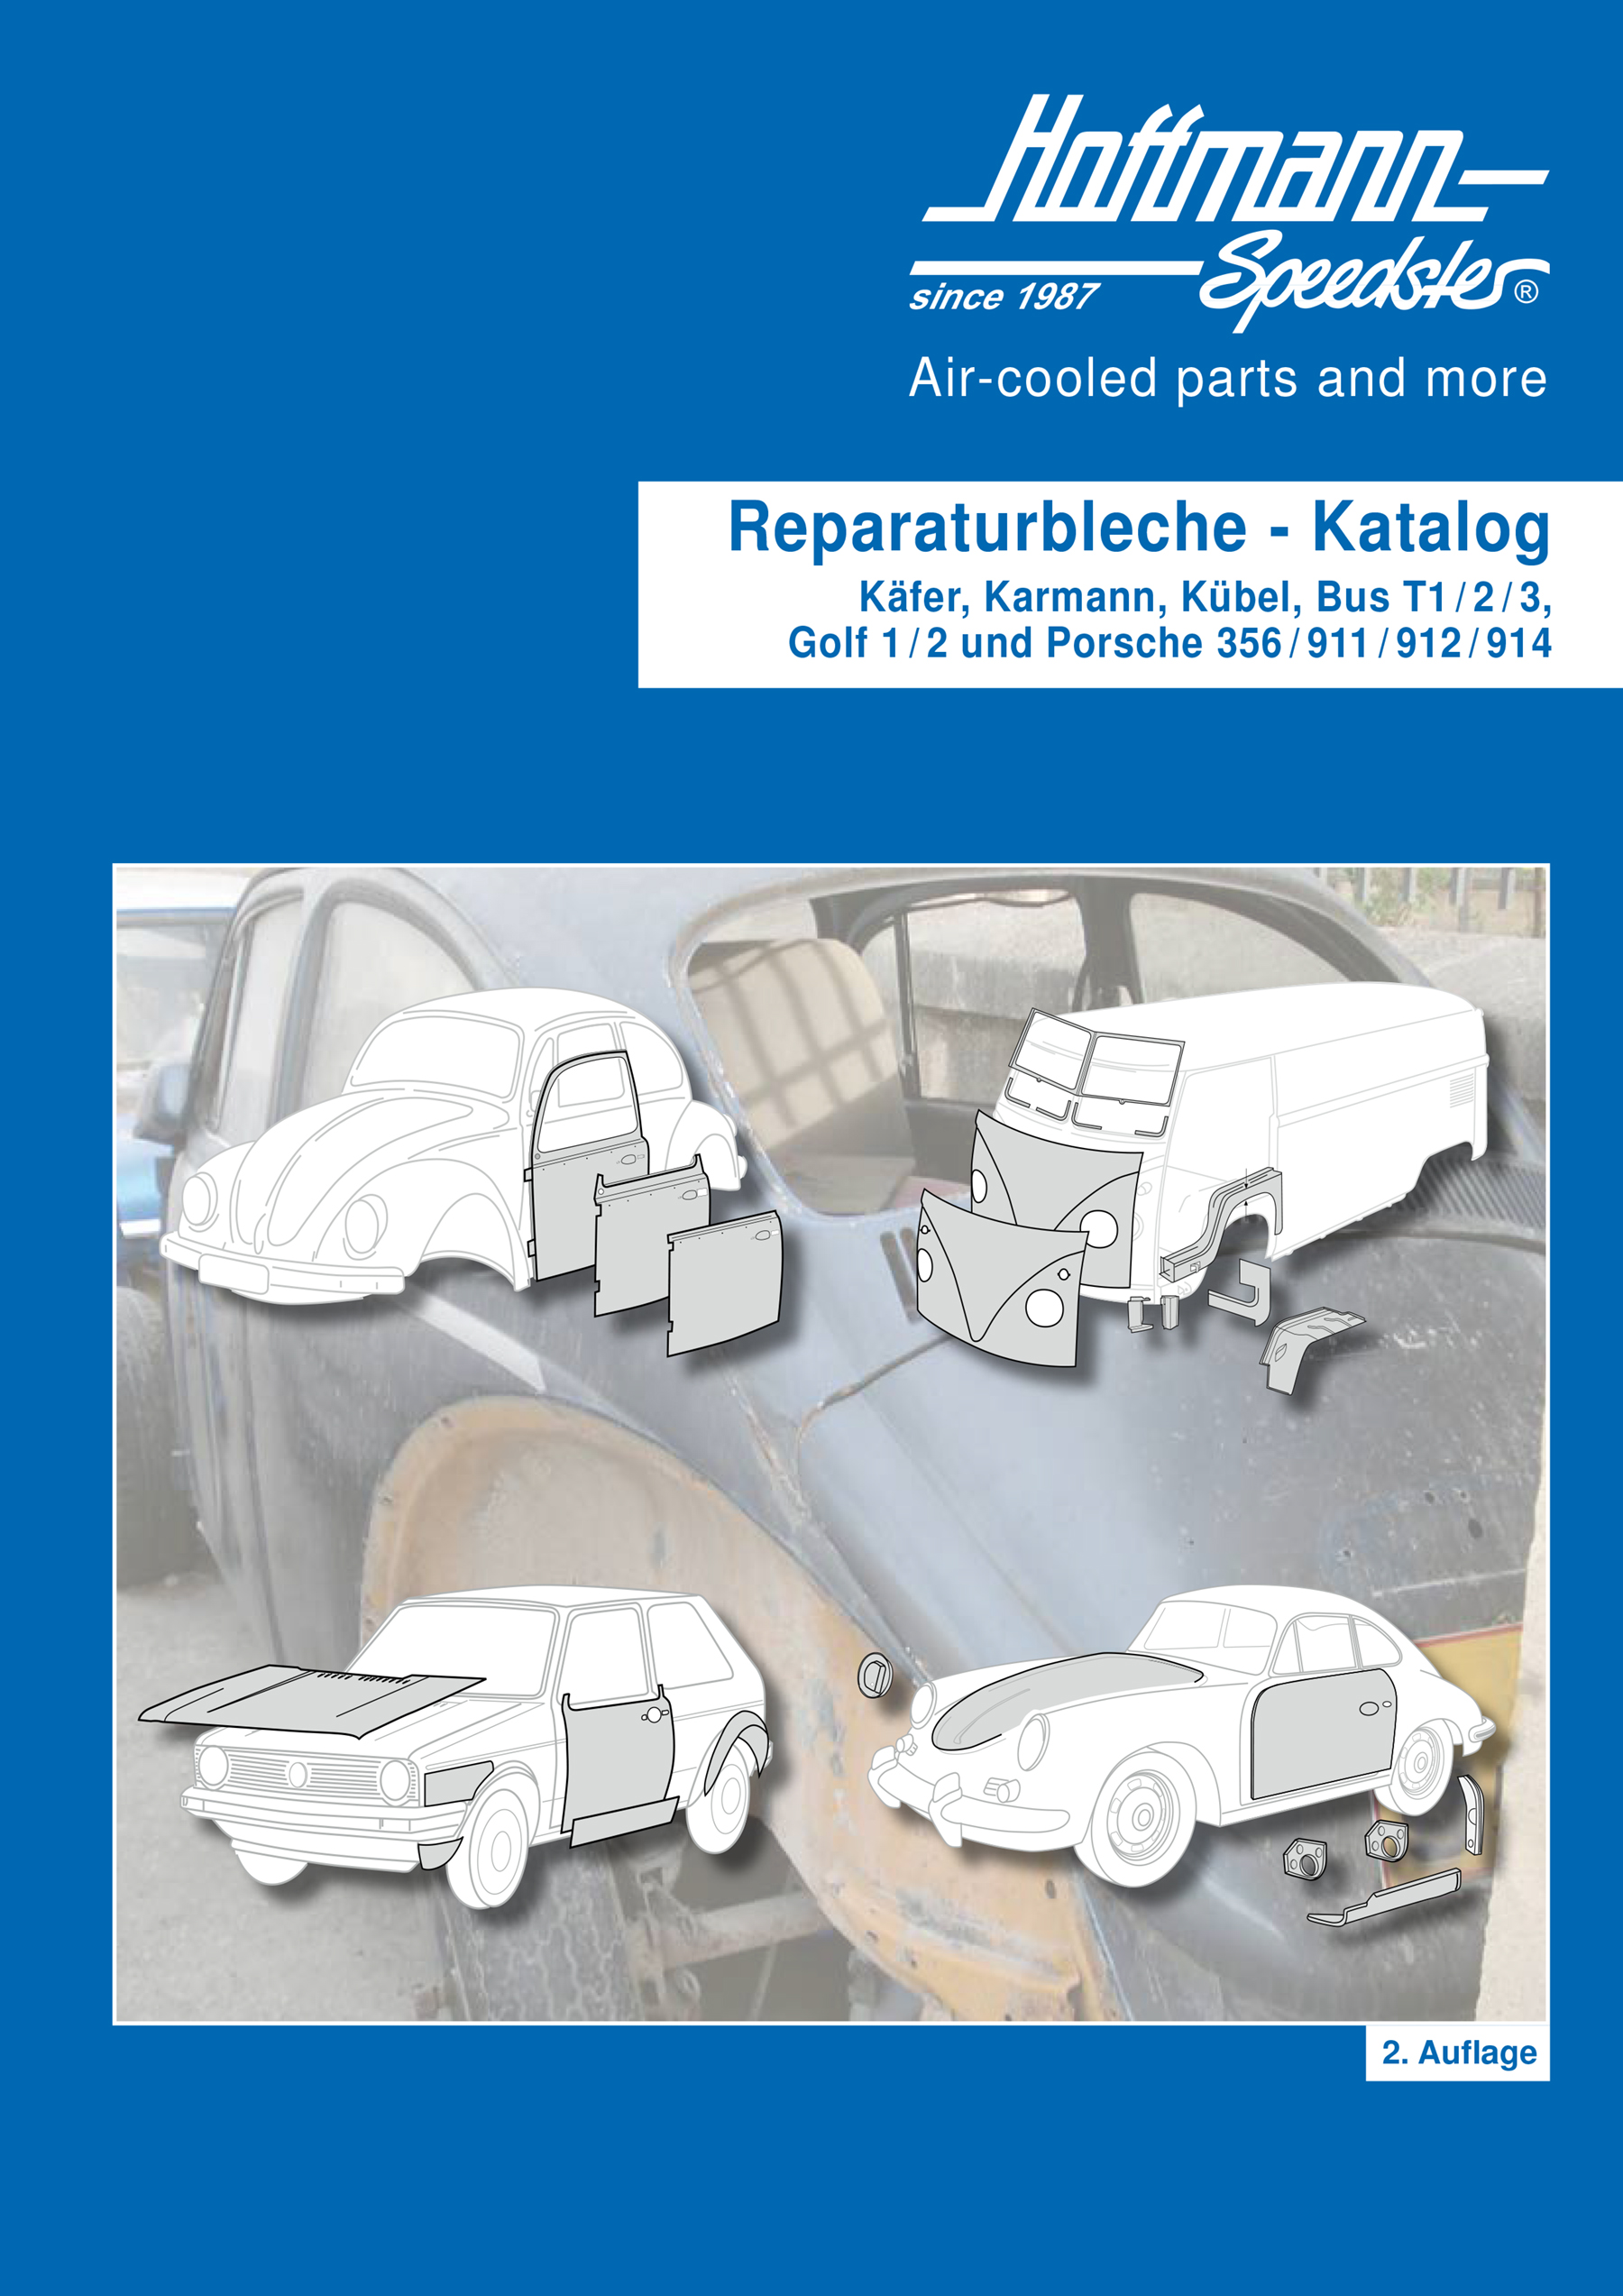 Reparaturbleche-Katalog, 2020